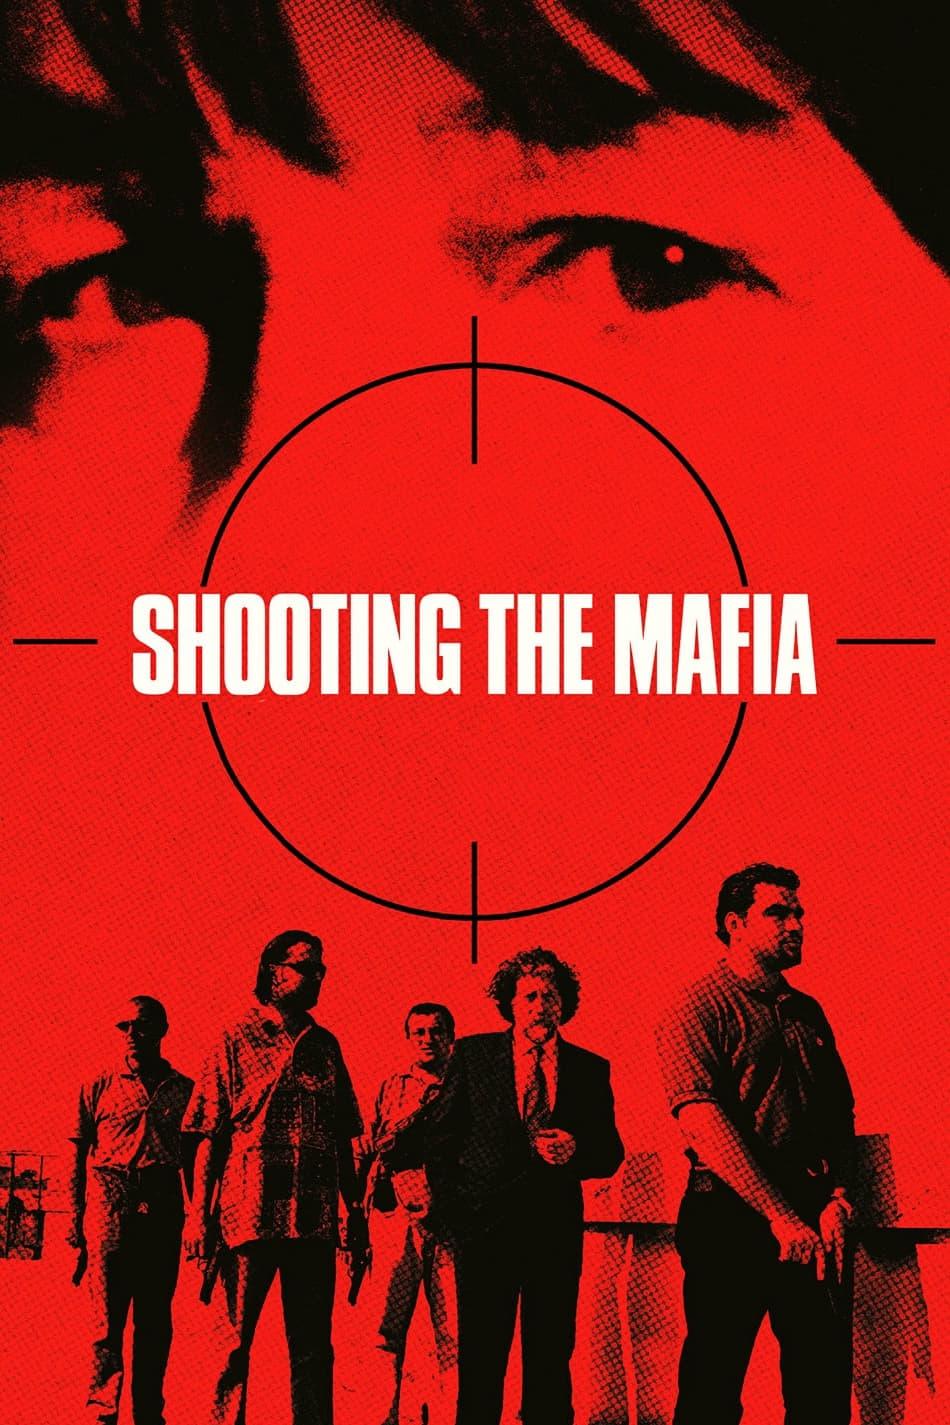 Shooting the Mafia poster